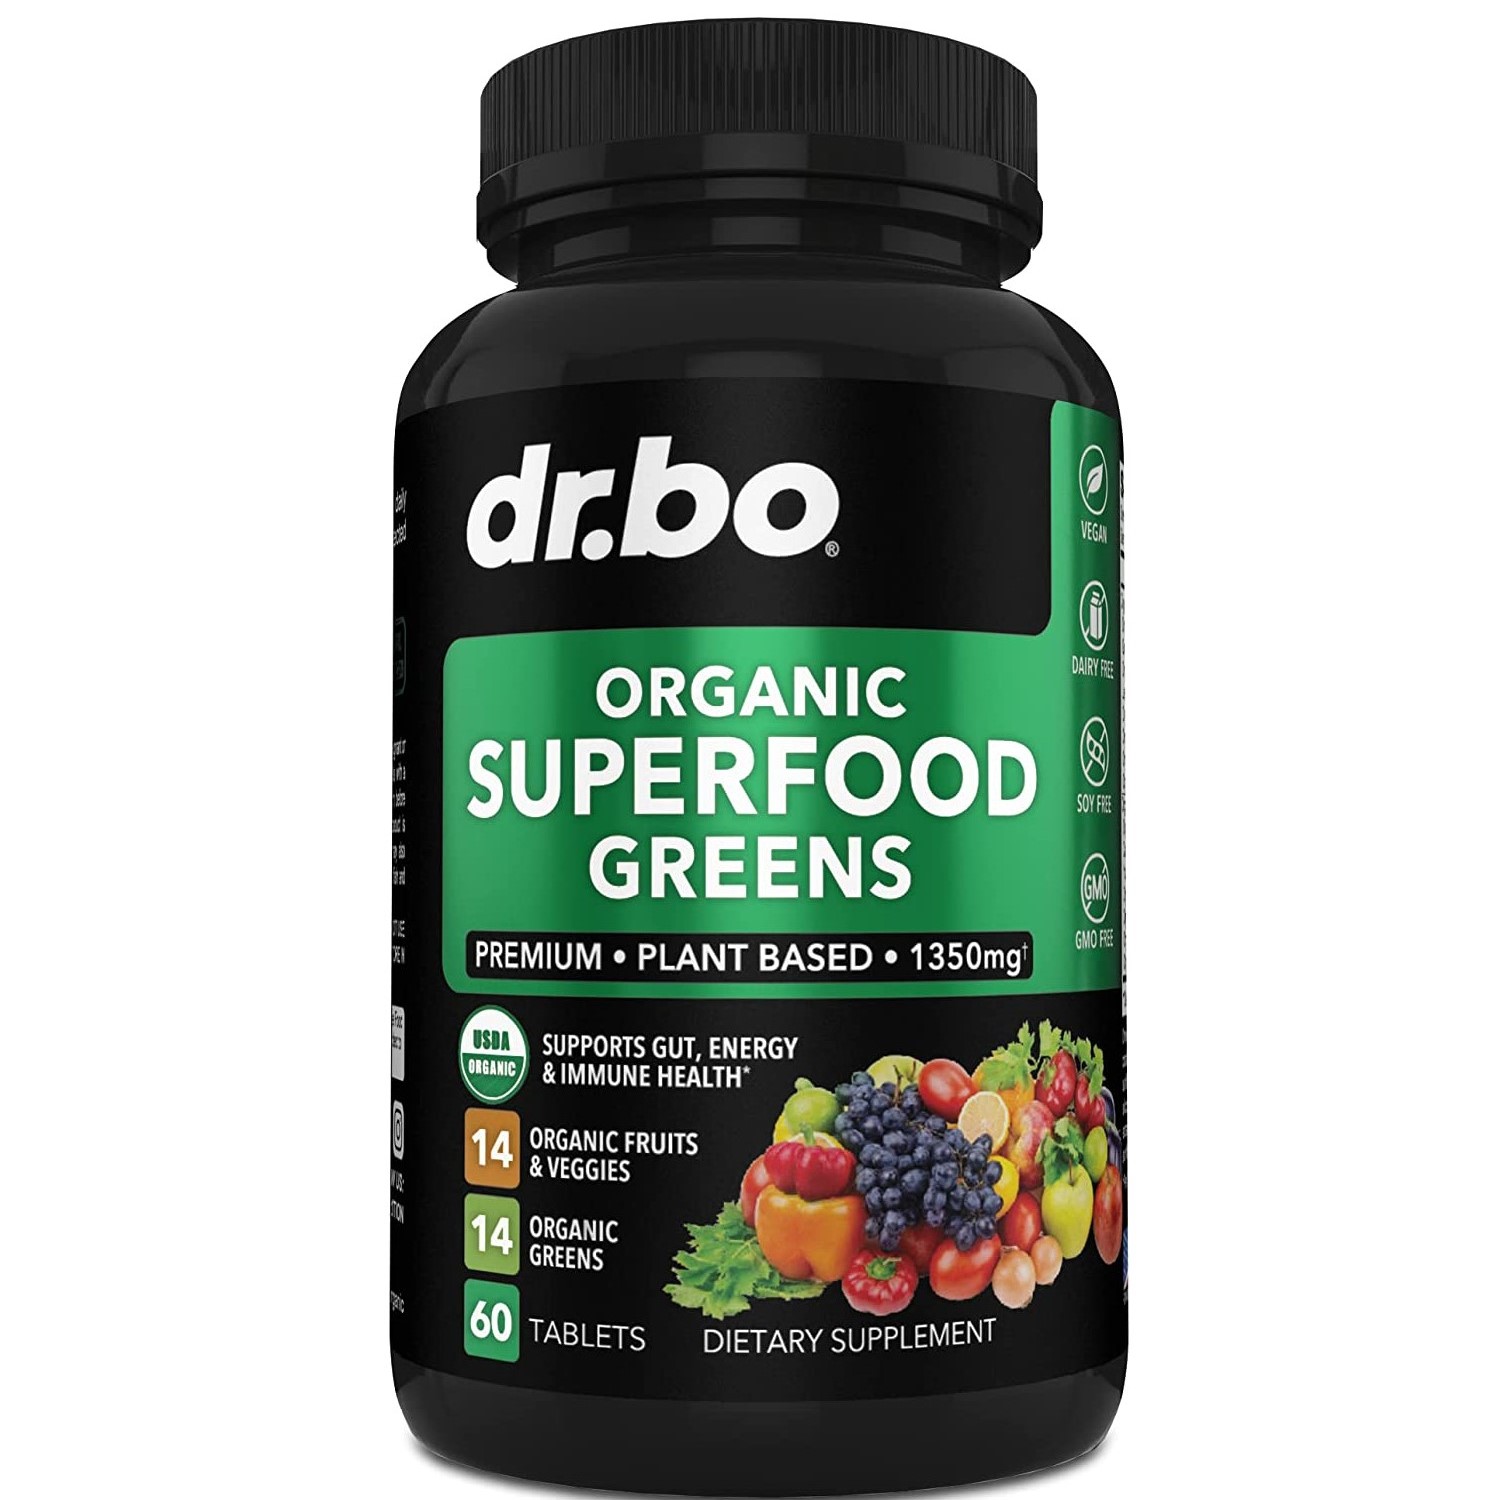 Dr.BO Organic Superfood Greens Tablets